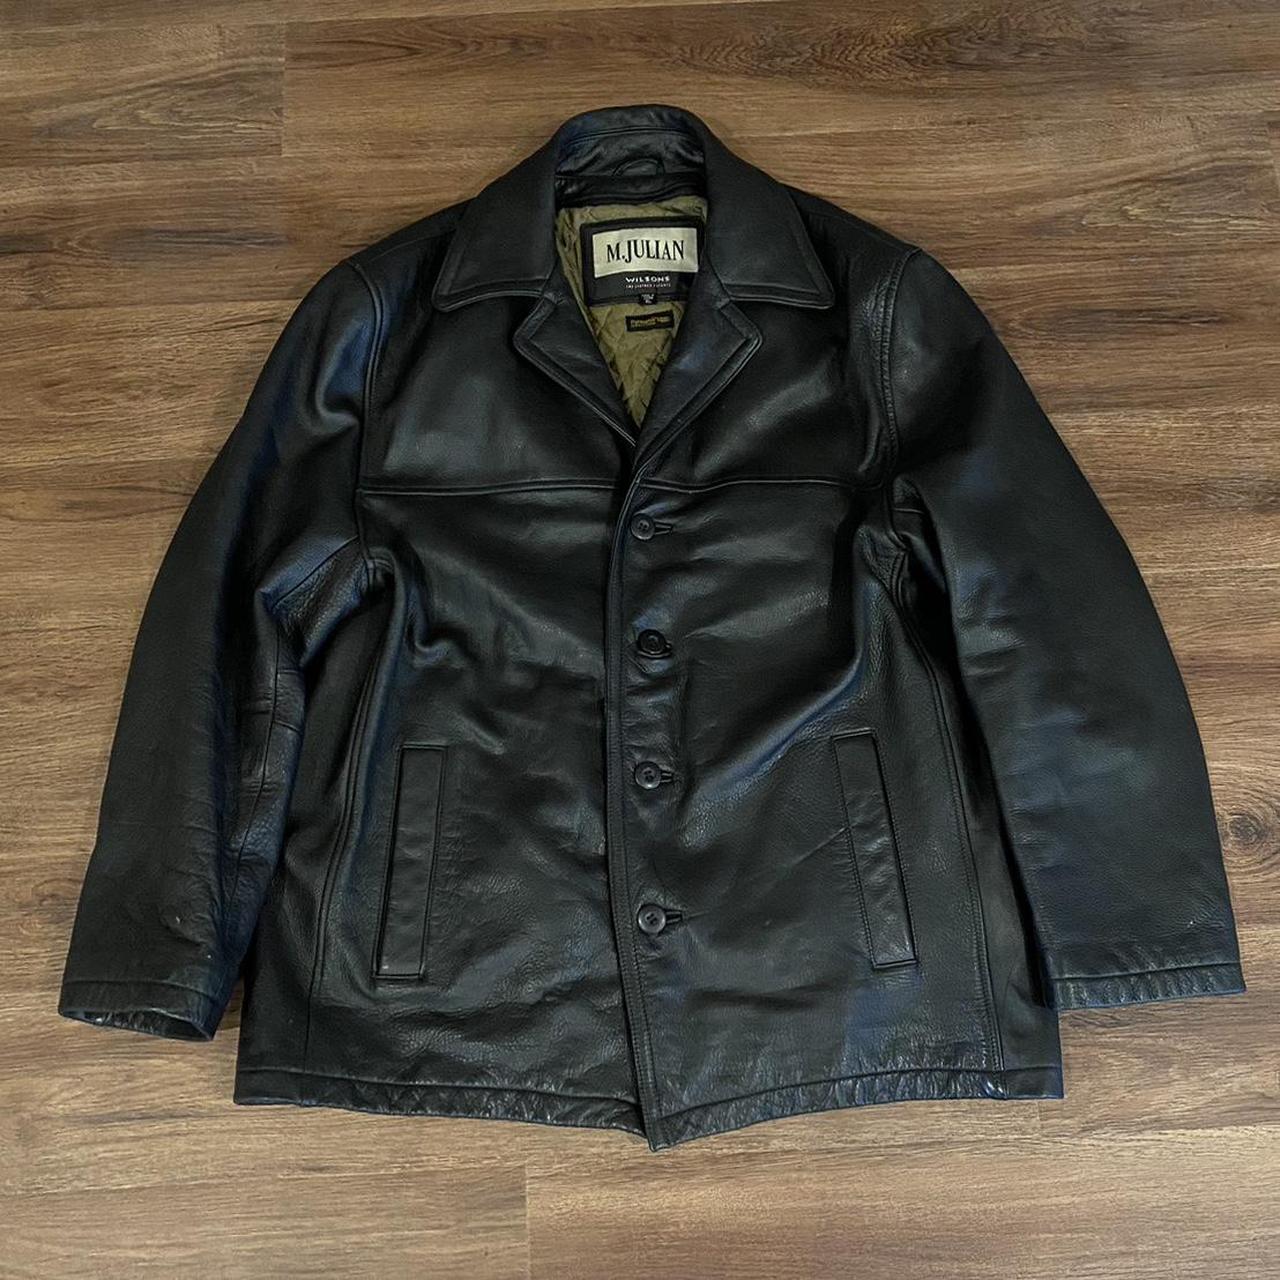 Wilsons M Julian Mens XL Leather Jacket Thinsulate... - Depop